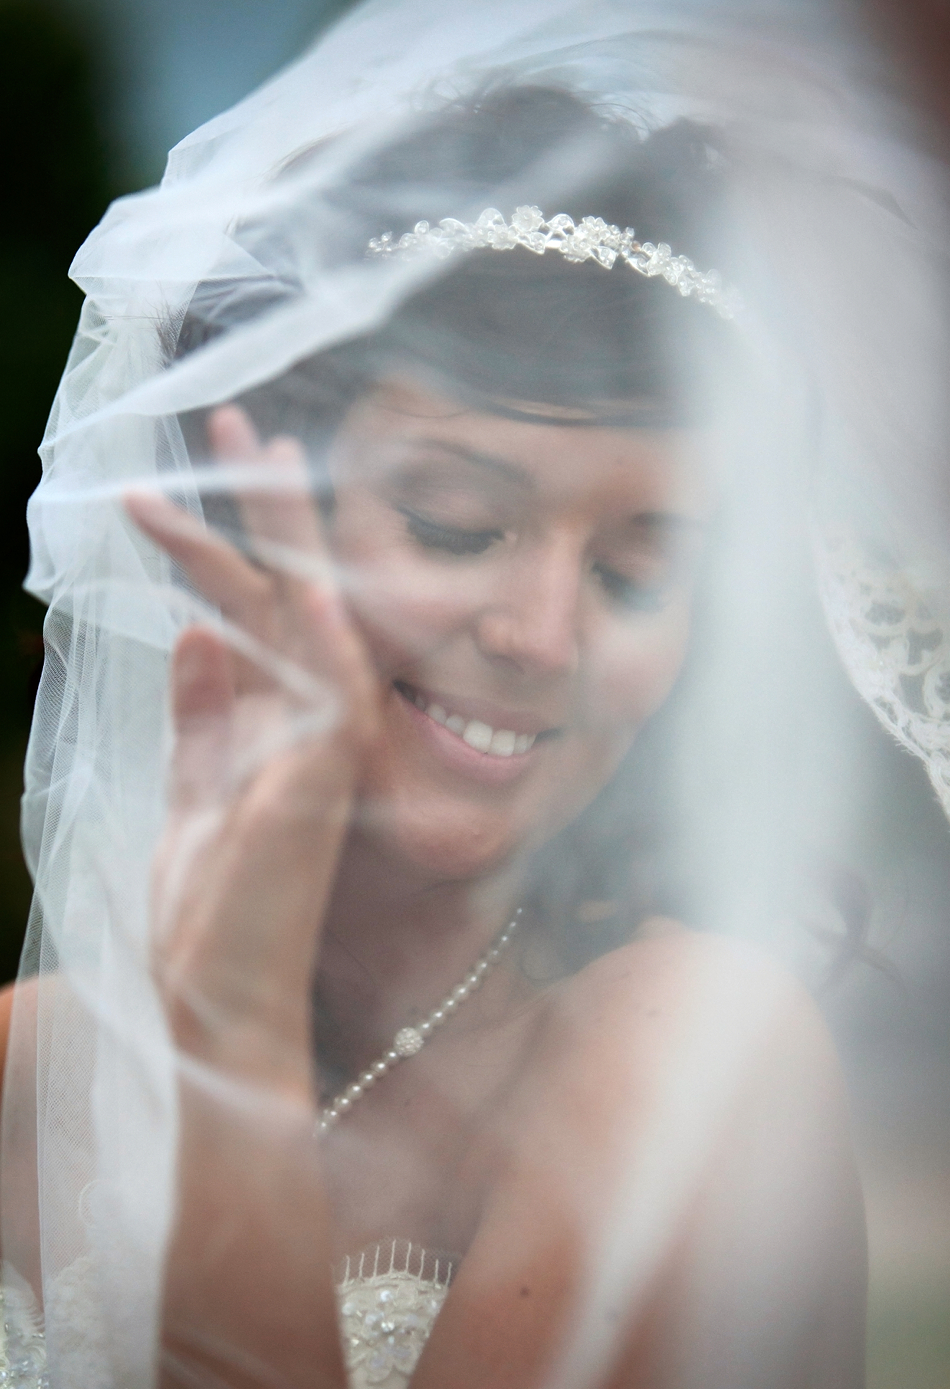 Woman wearing bridal veil